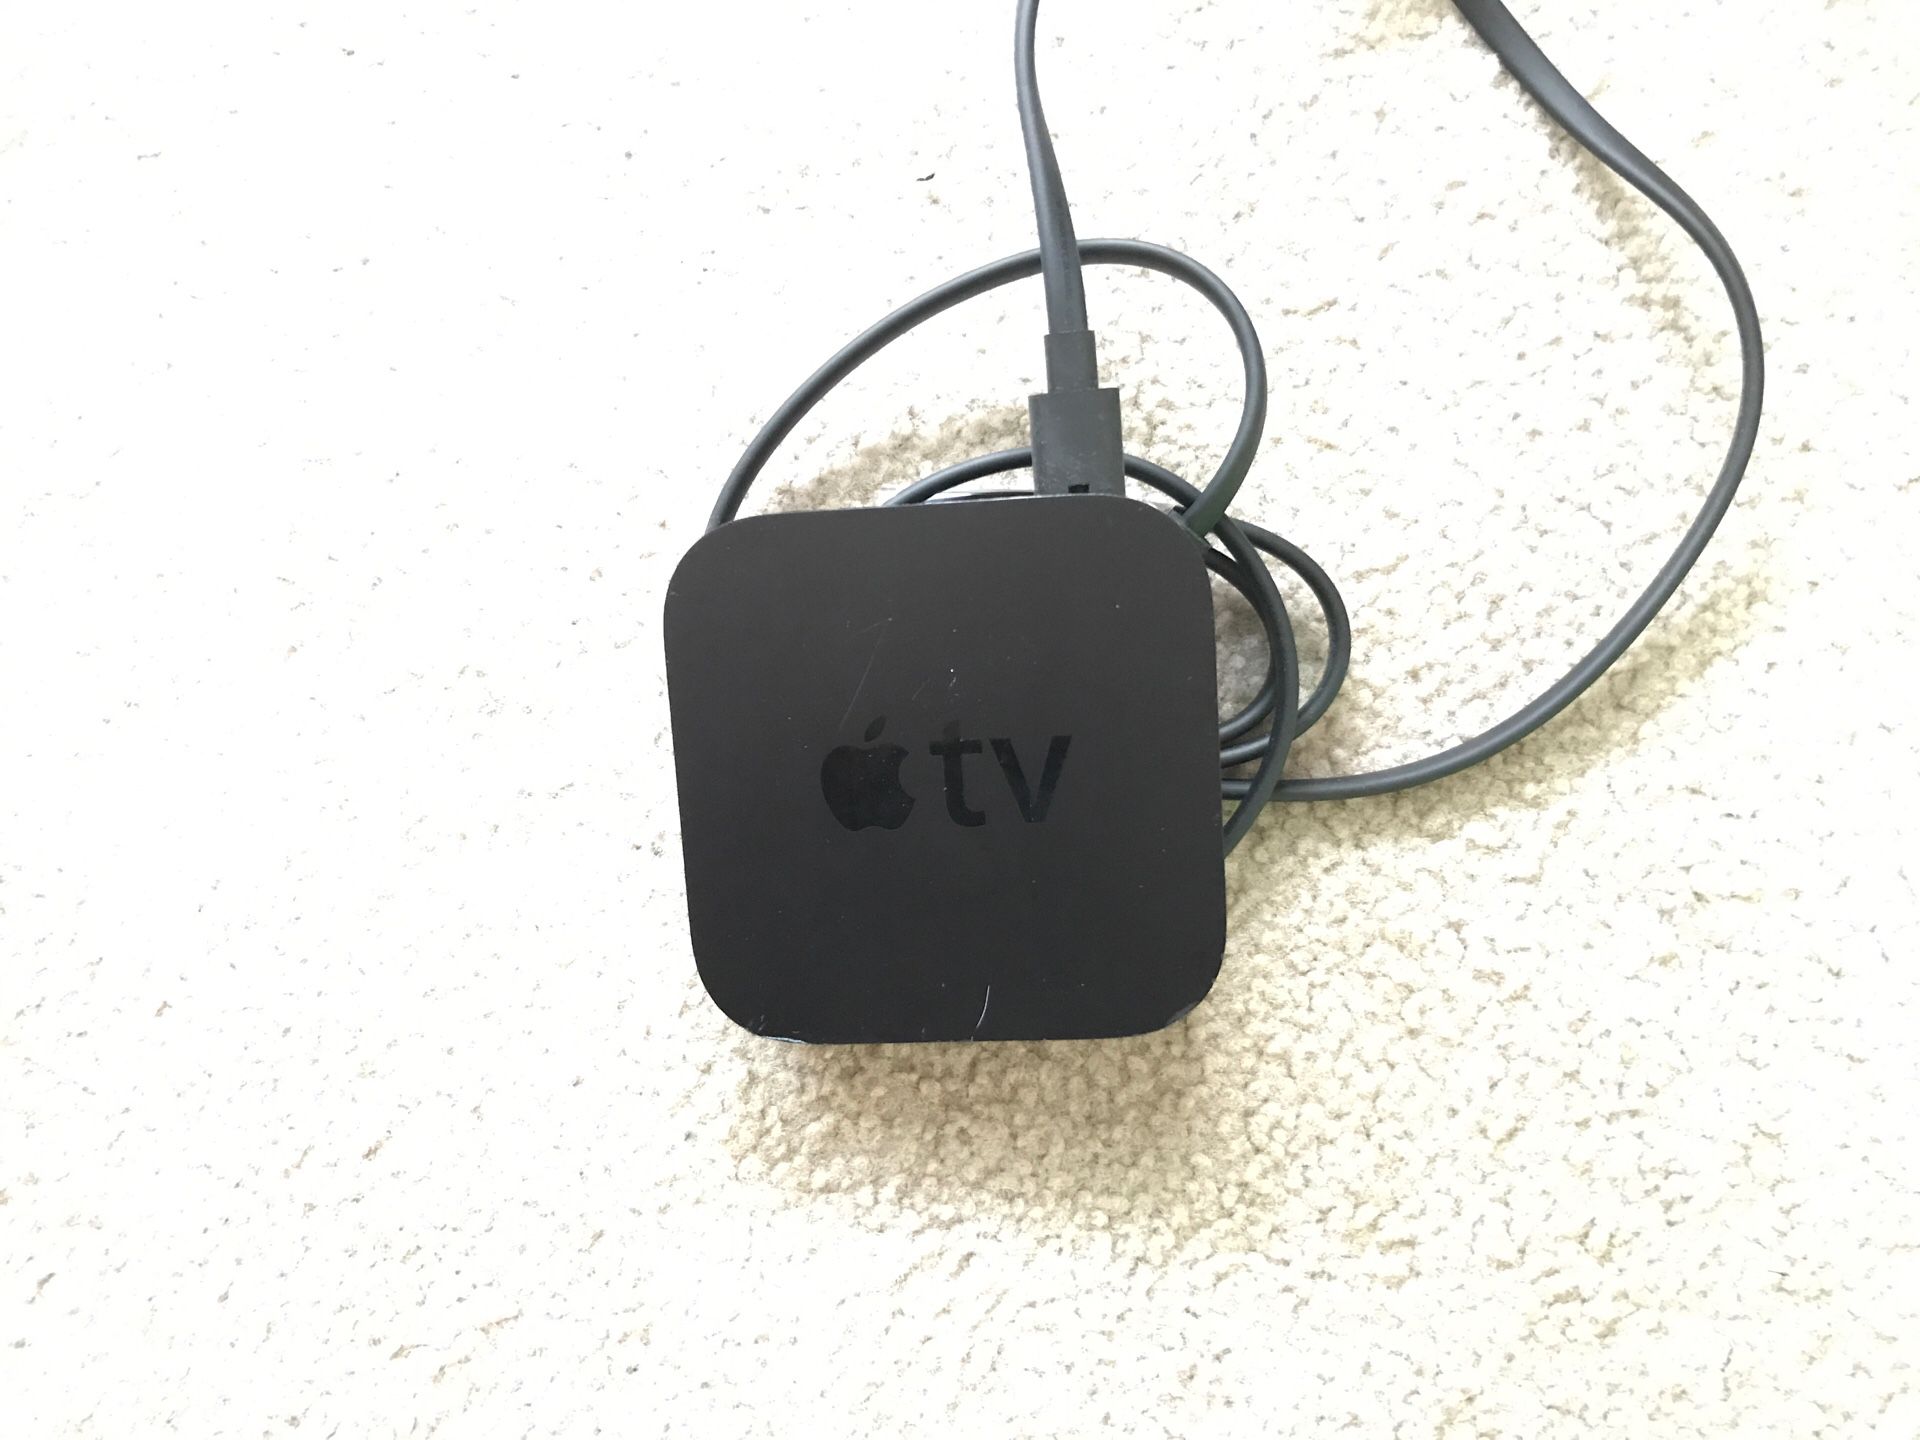 Apple TV AL1378